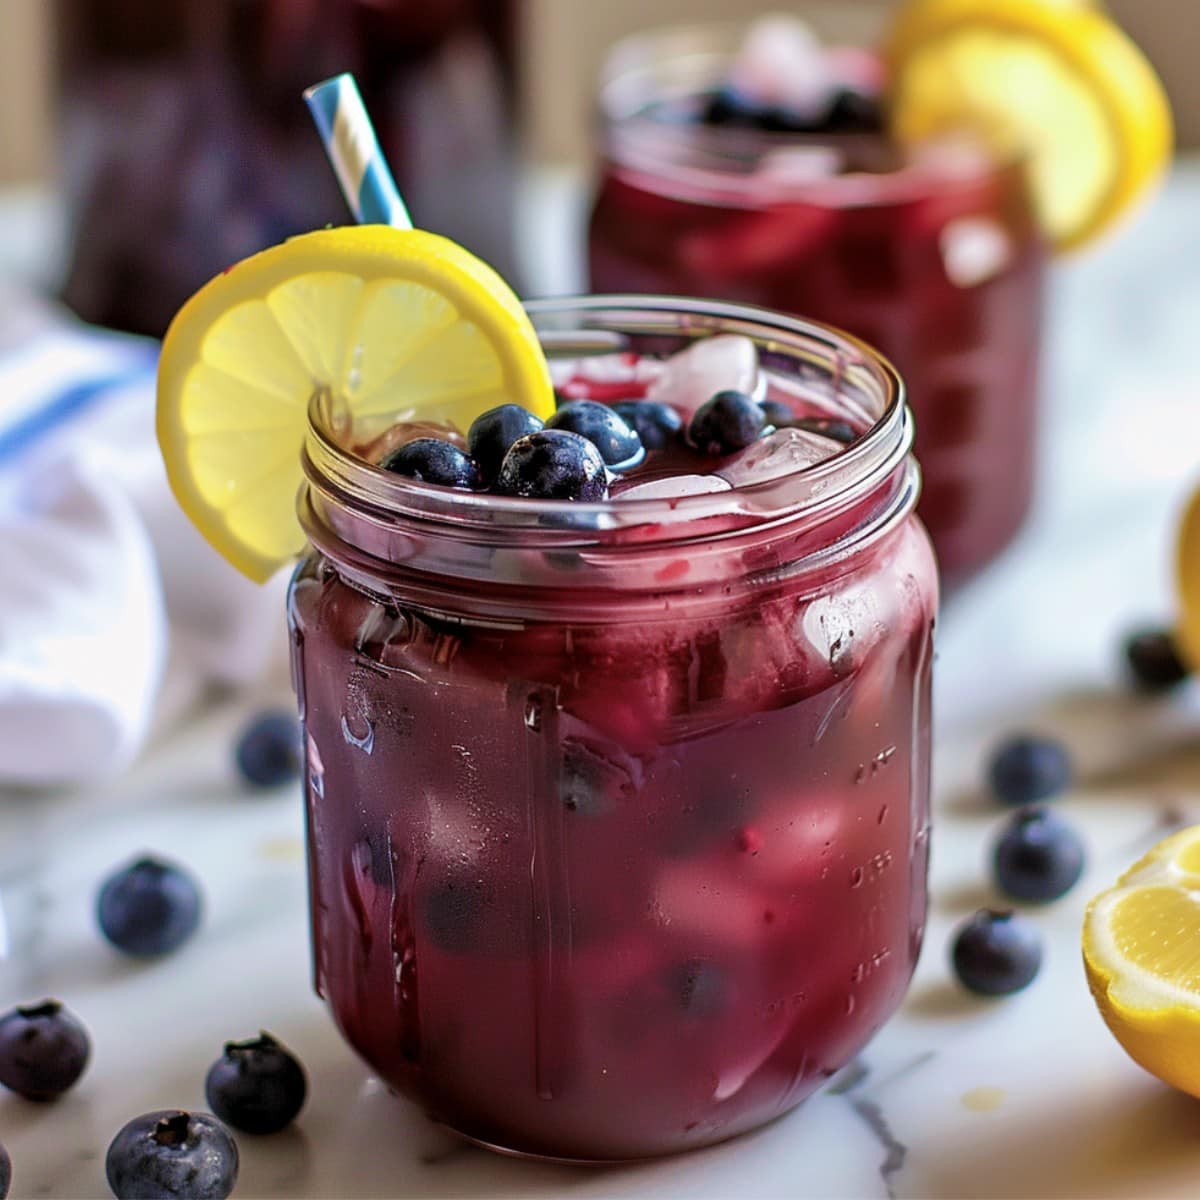 Homemade blueberry lemonade, bursting with juicy blueberries and zesty lemon flavor